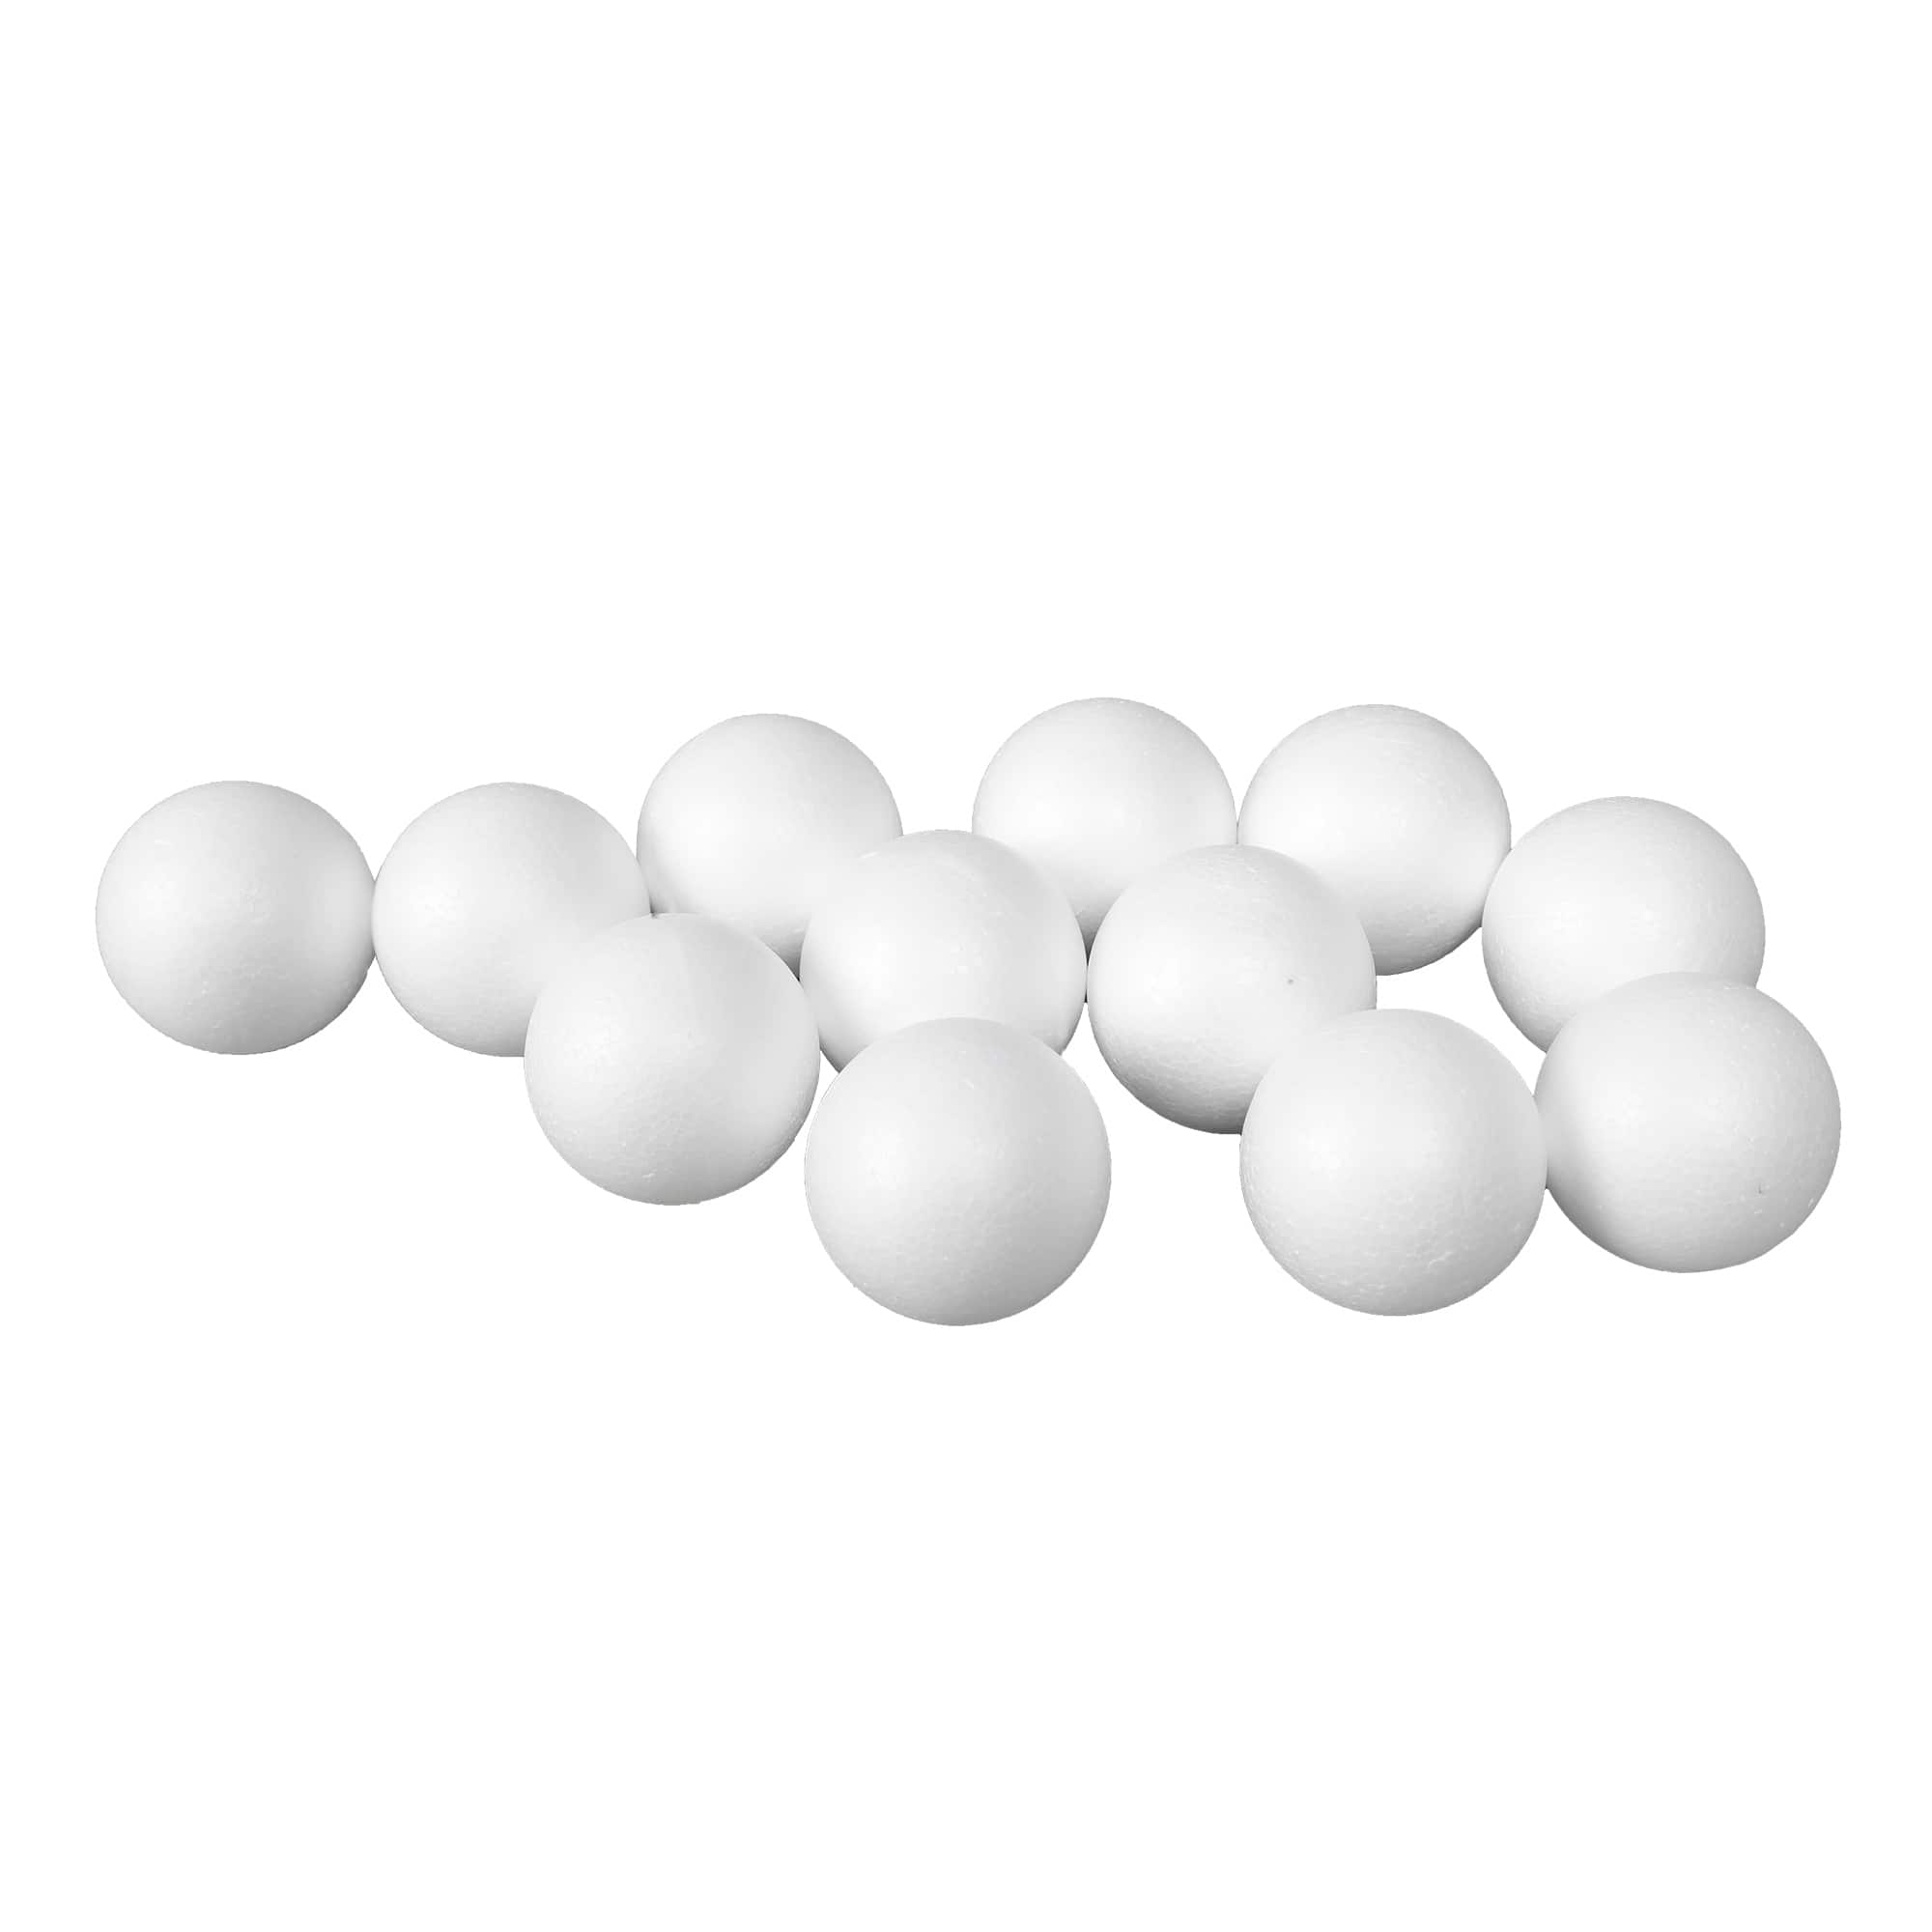 Small styrofoam balls isolated on white background Stock Photo